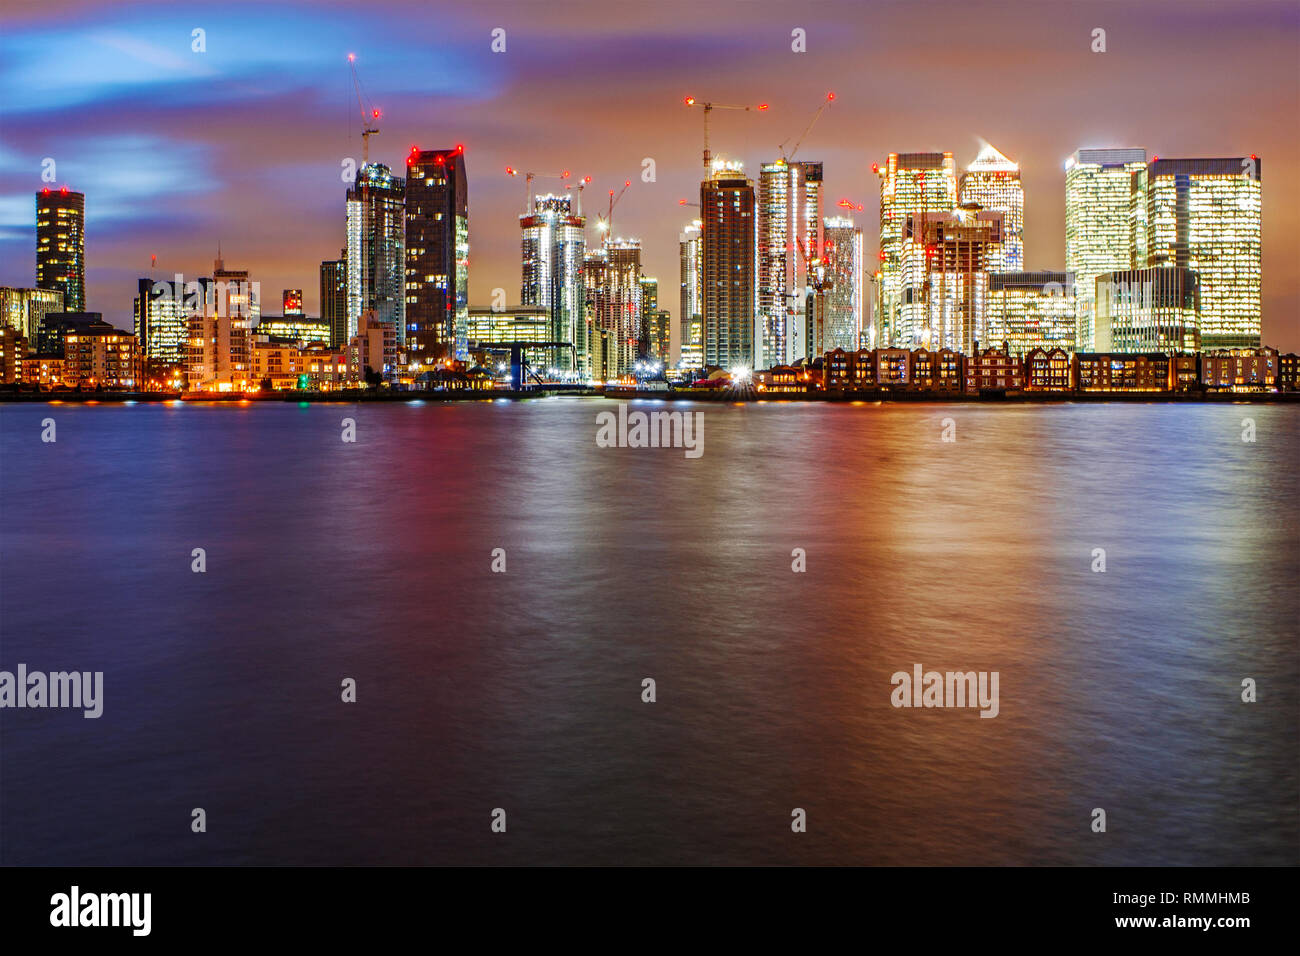 Canary wharf skyline at night, London, United Kingdom Stock Photo